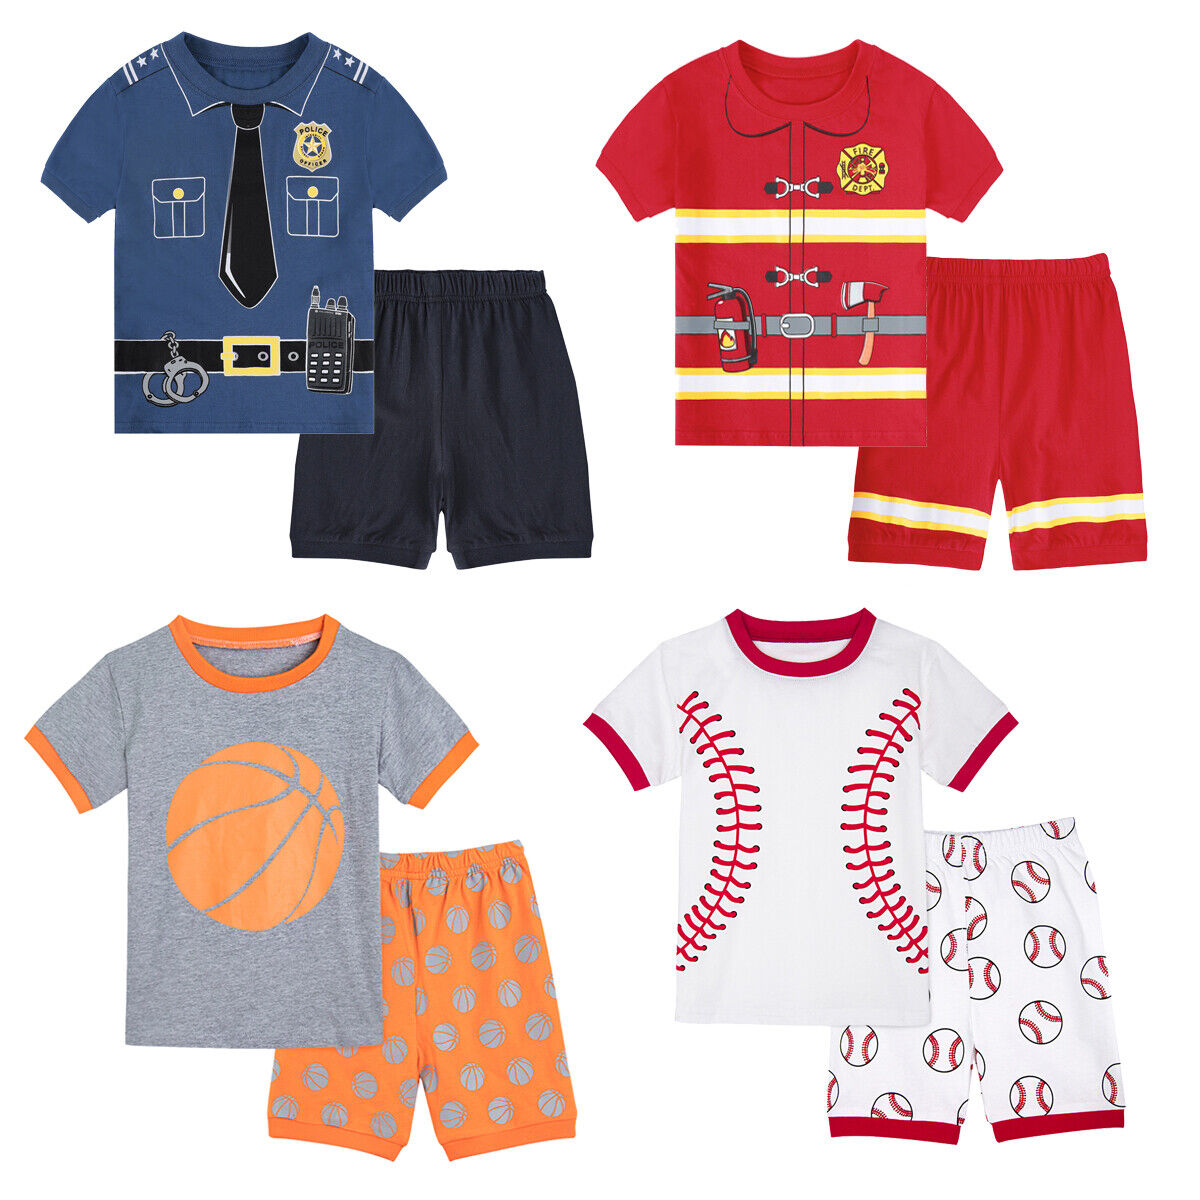 Kids Boy Sleepwear Toddler Firefighter Short Max 63% OFF Police Max 69% OFF Pajamas